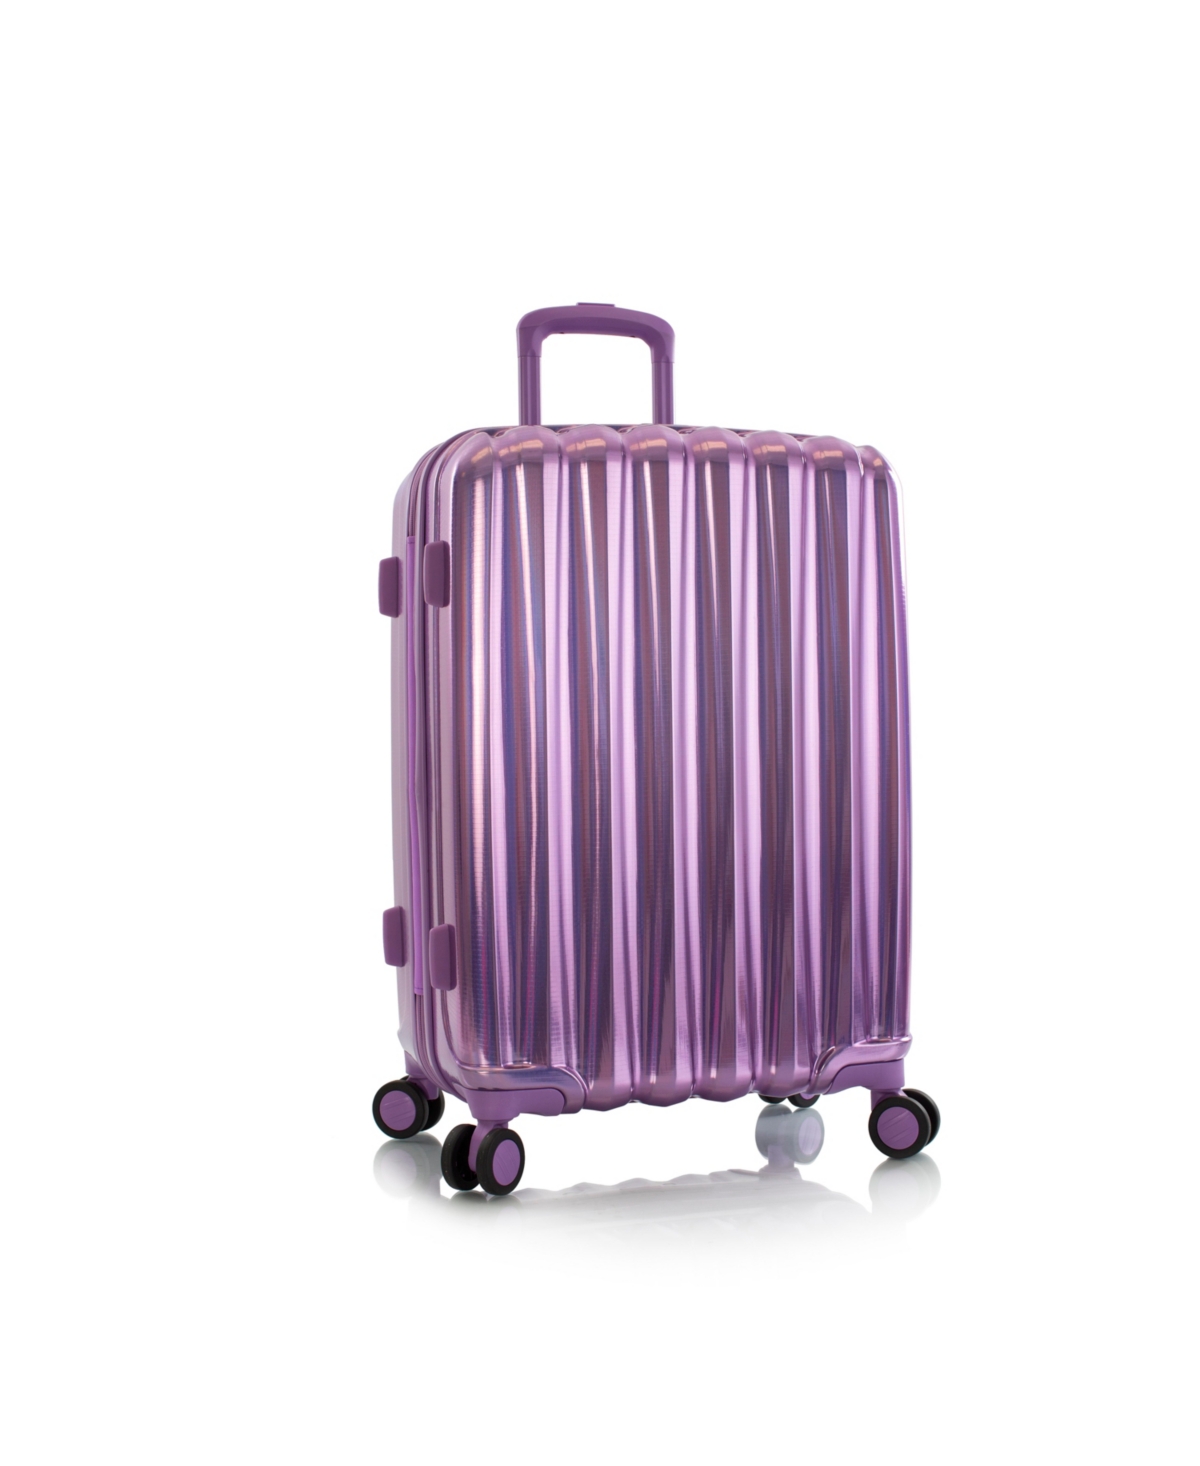 Astro 26" Hardside Spinner Luggage - Purple